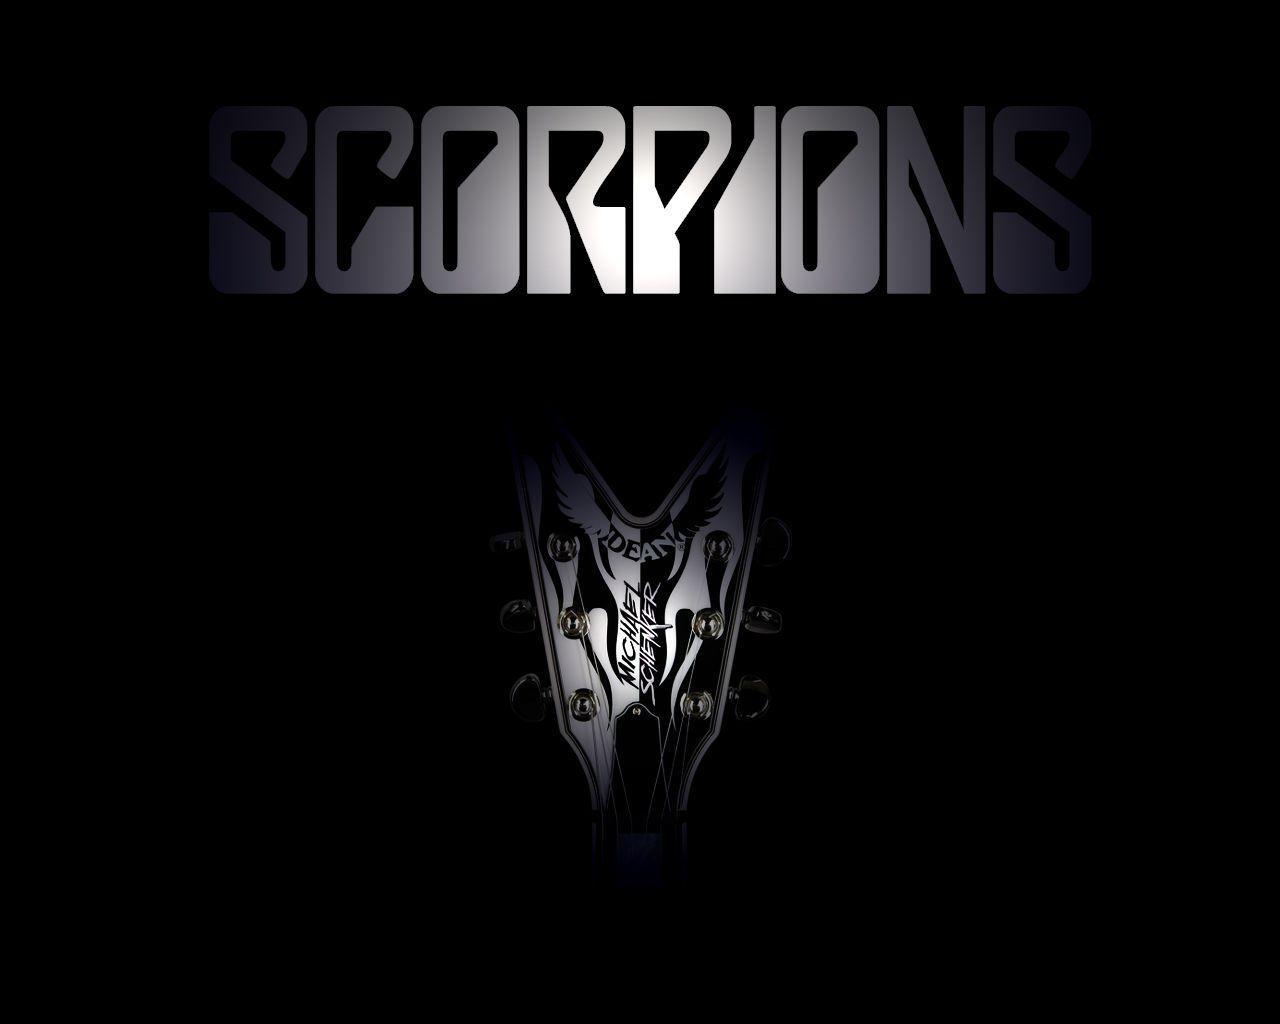 Scorpions wallpaper